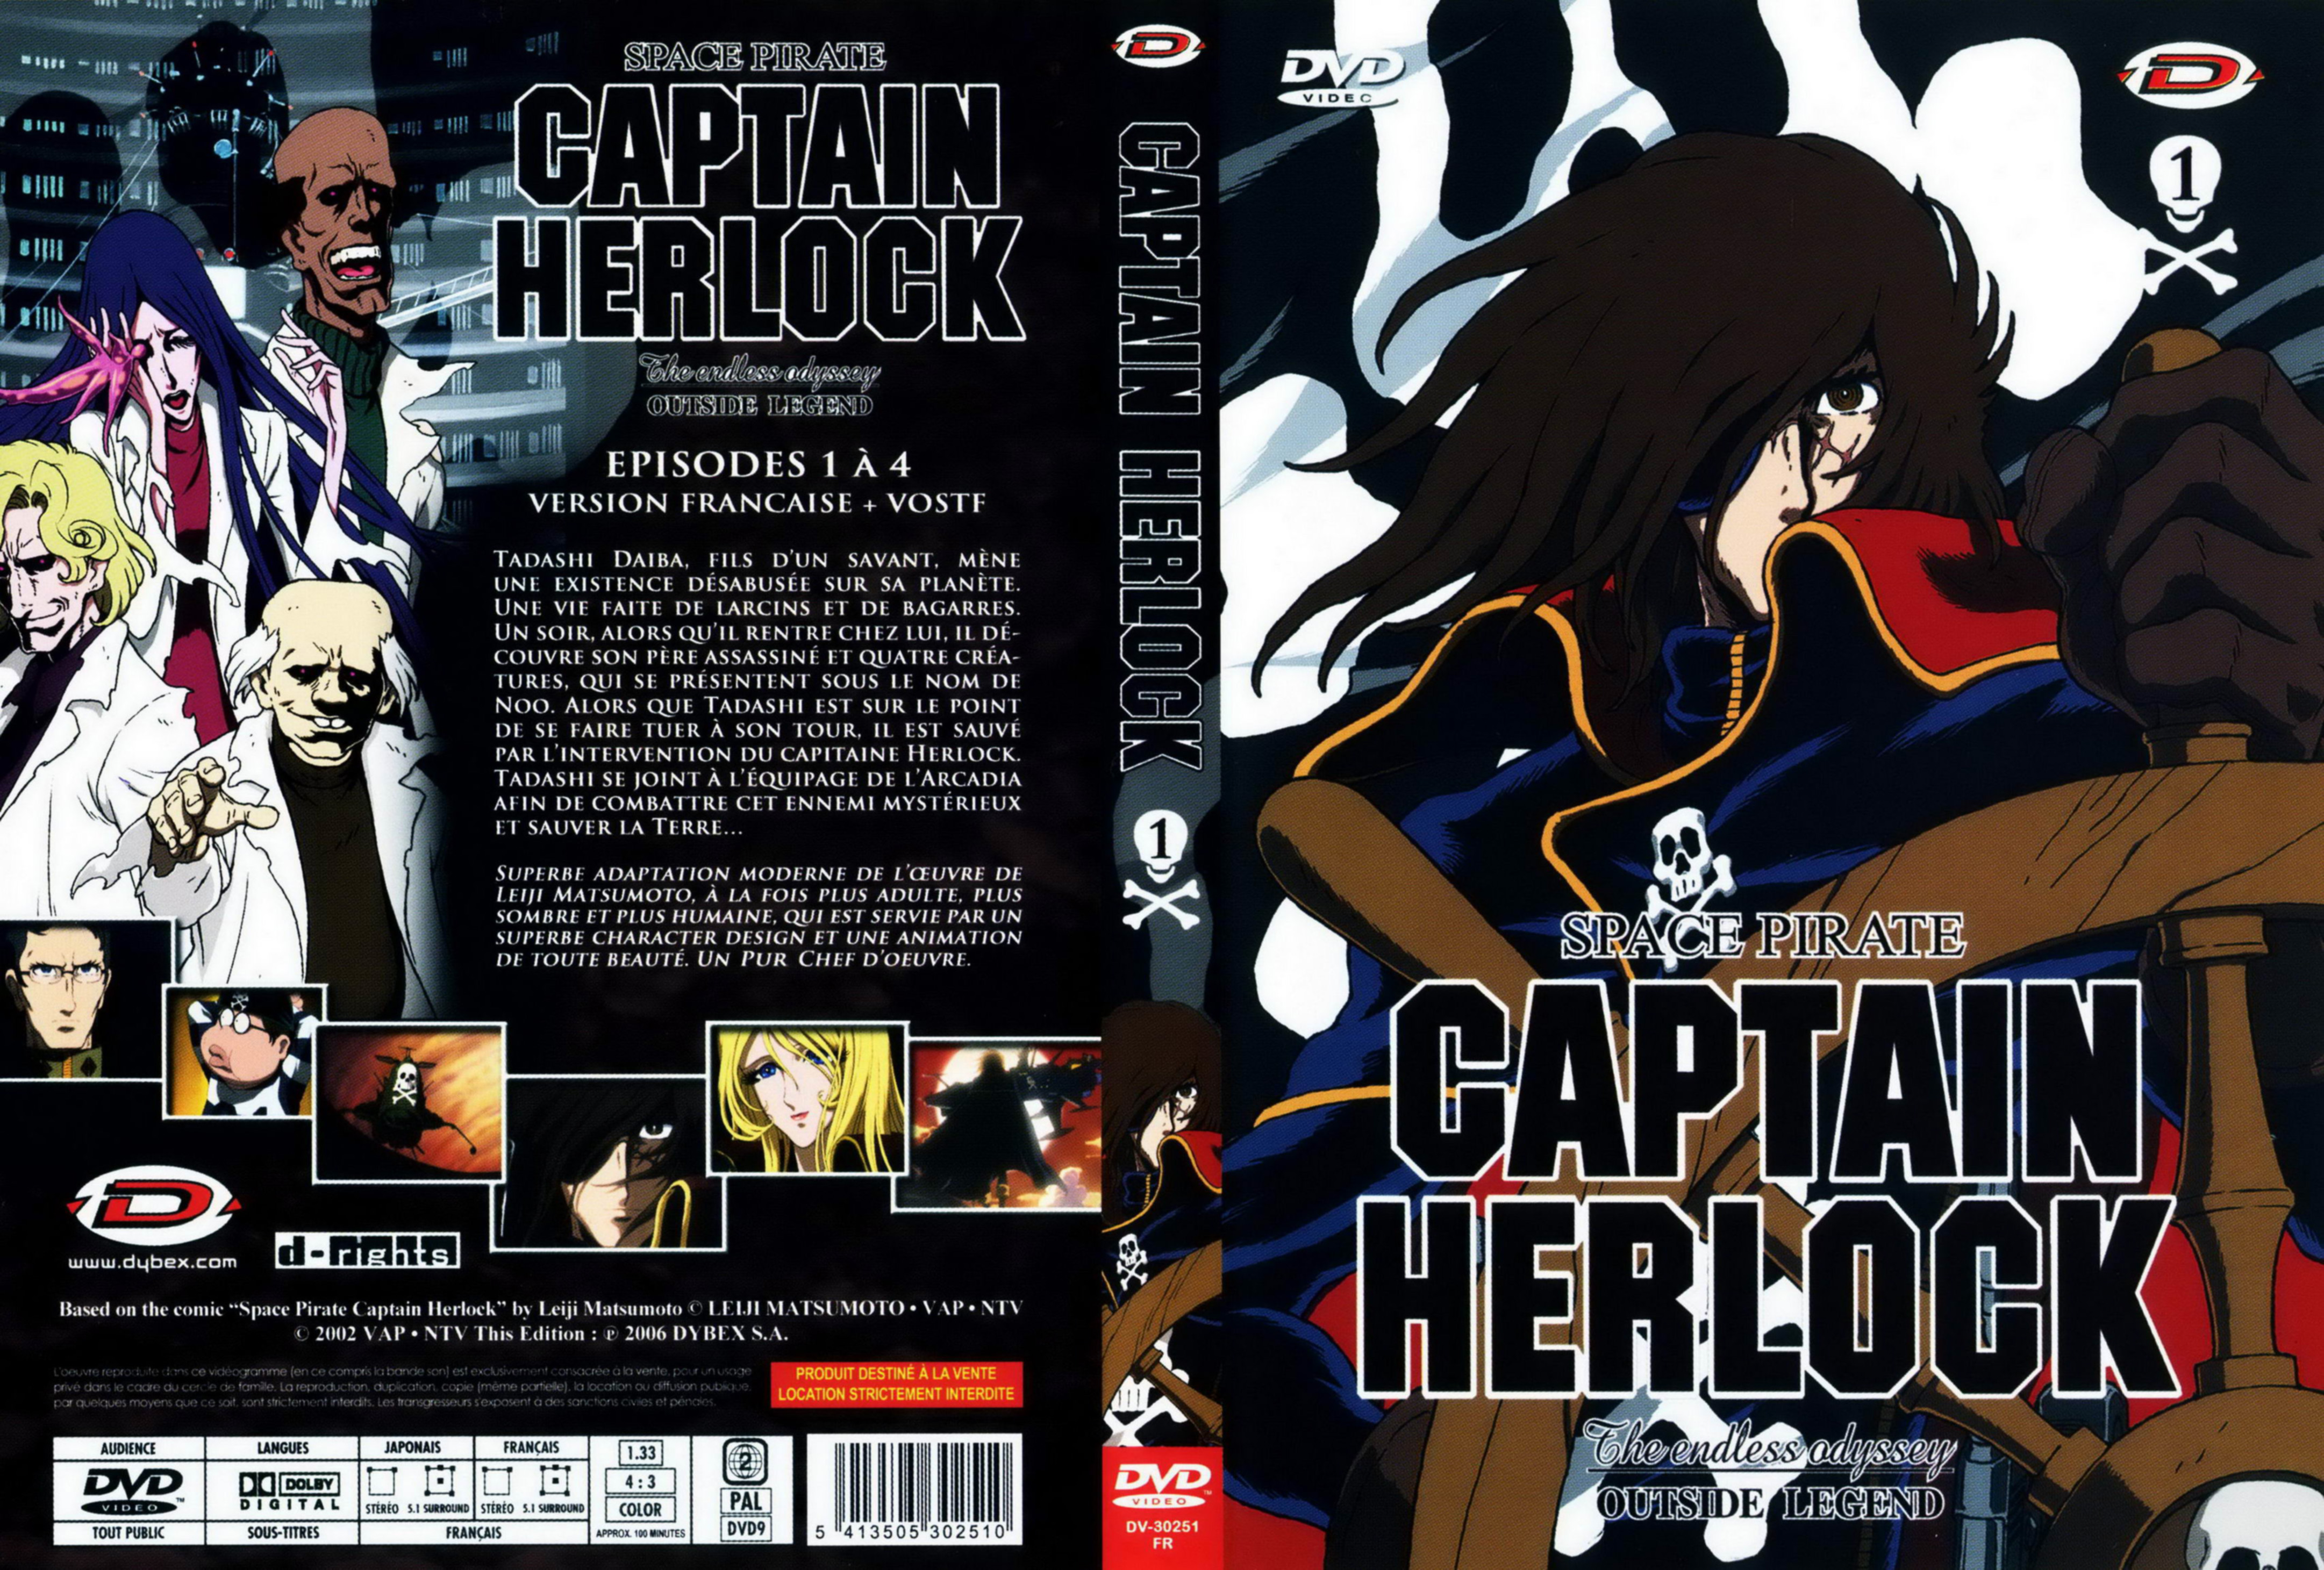 Jaquette DVD Captain Herlock The endless odyssey DVD 1